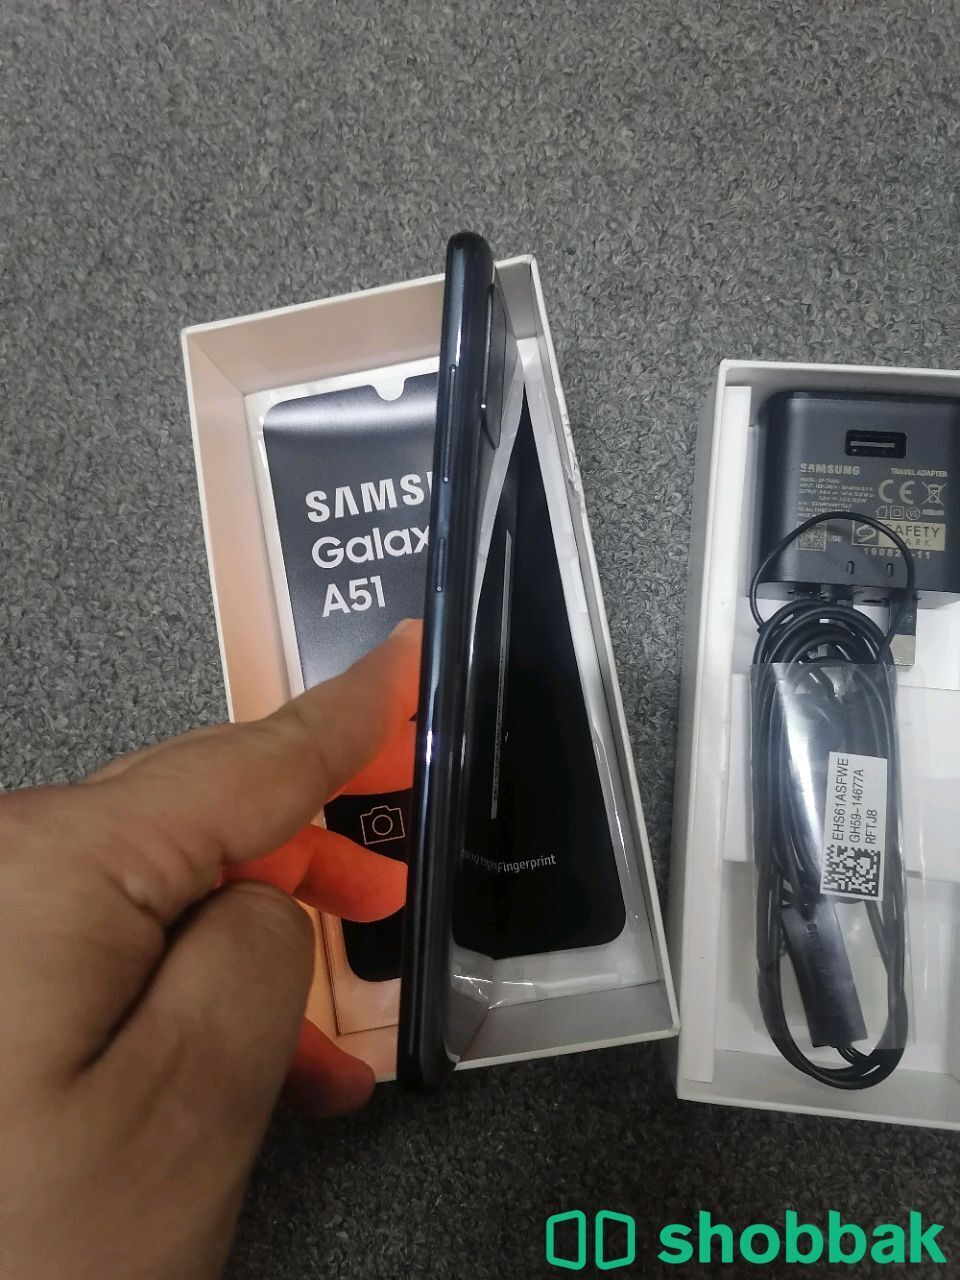 Samsung A51 Shobbak Saudi Arabia